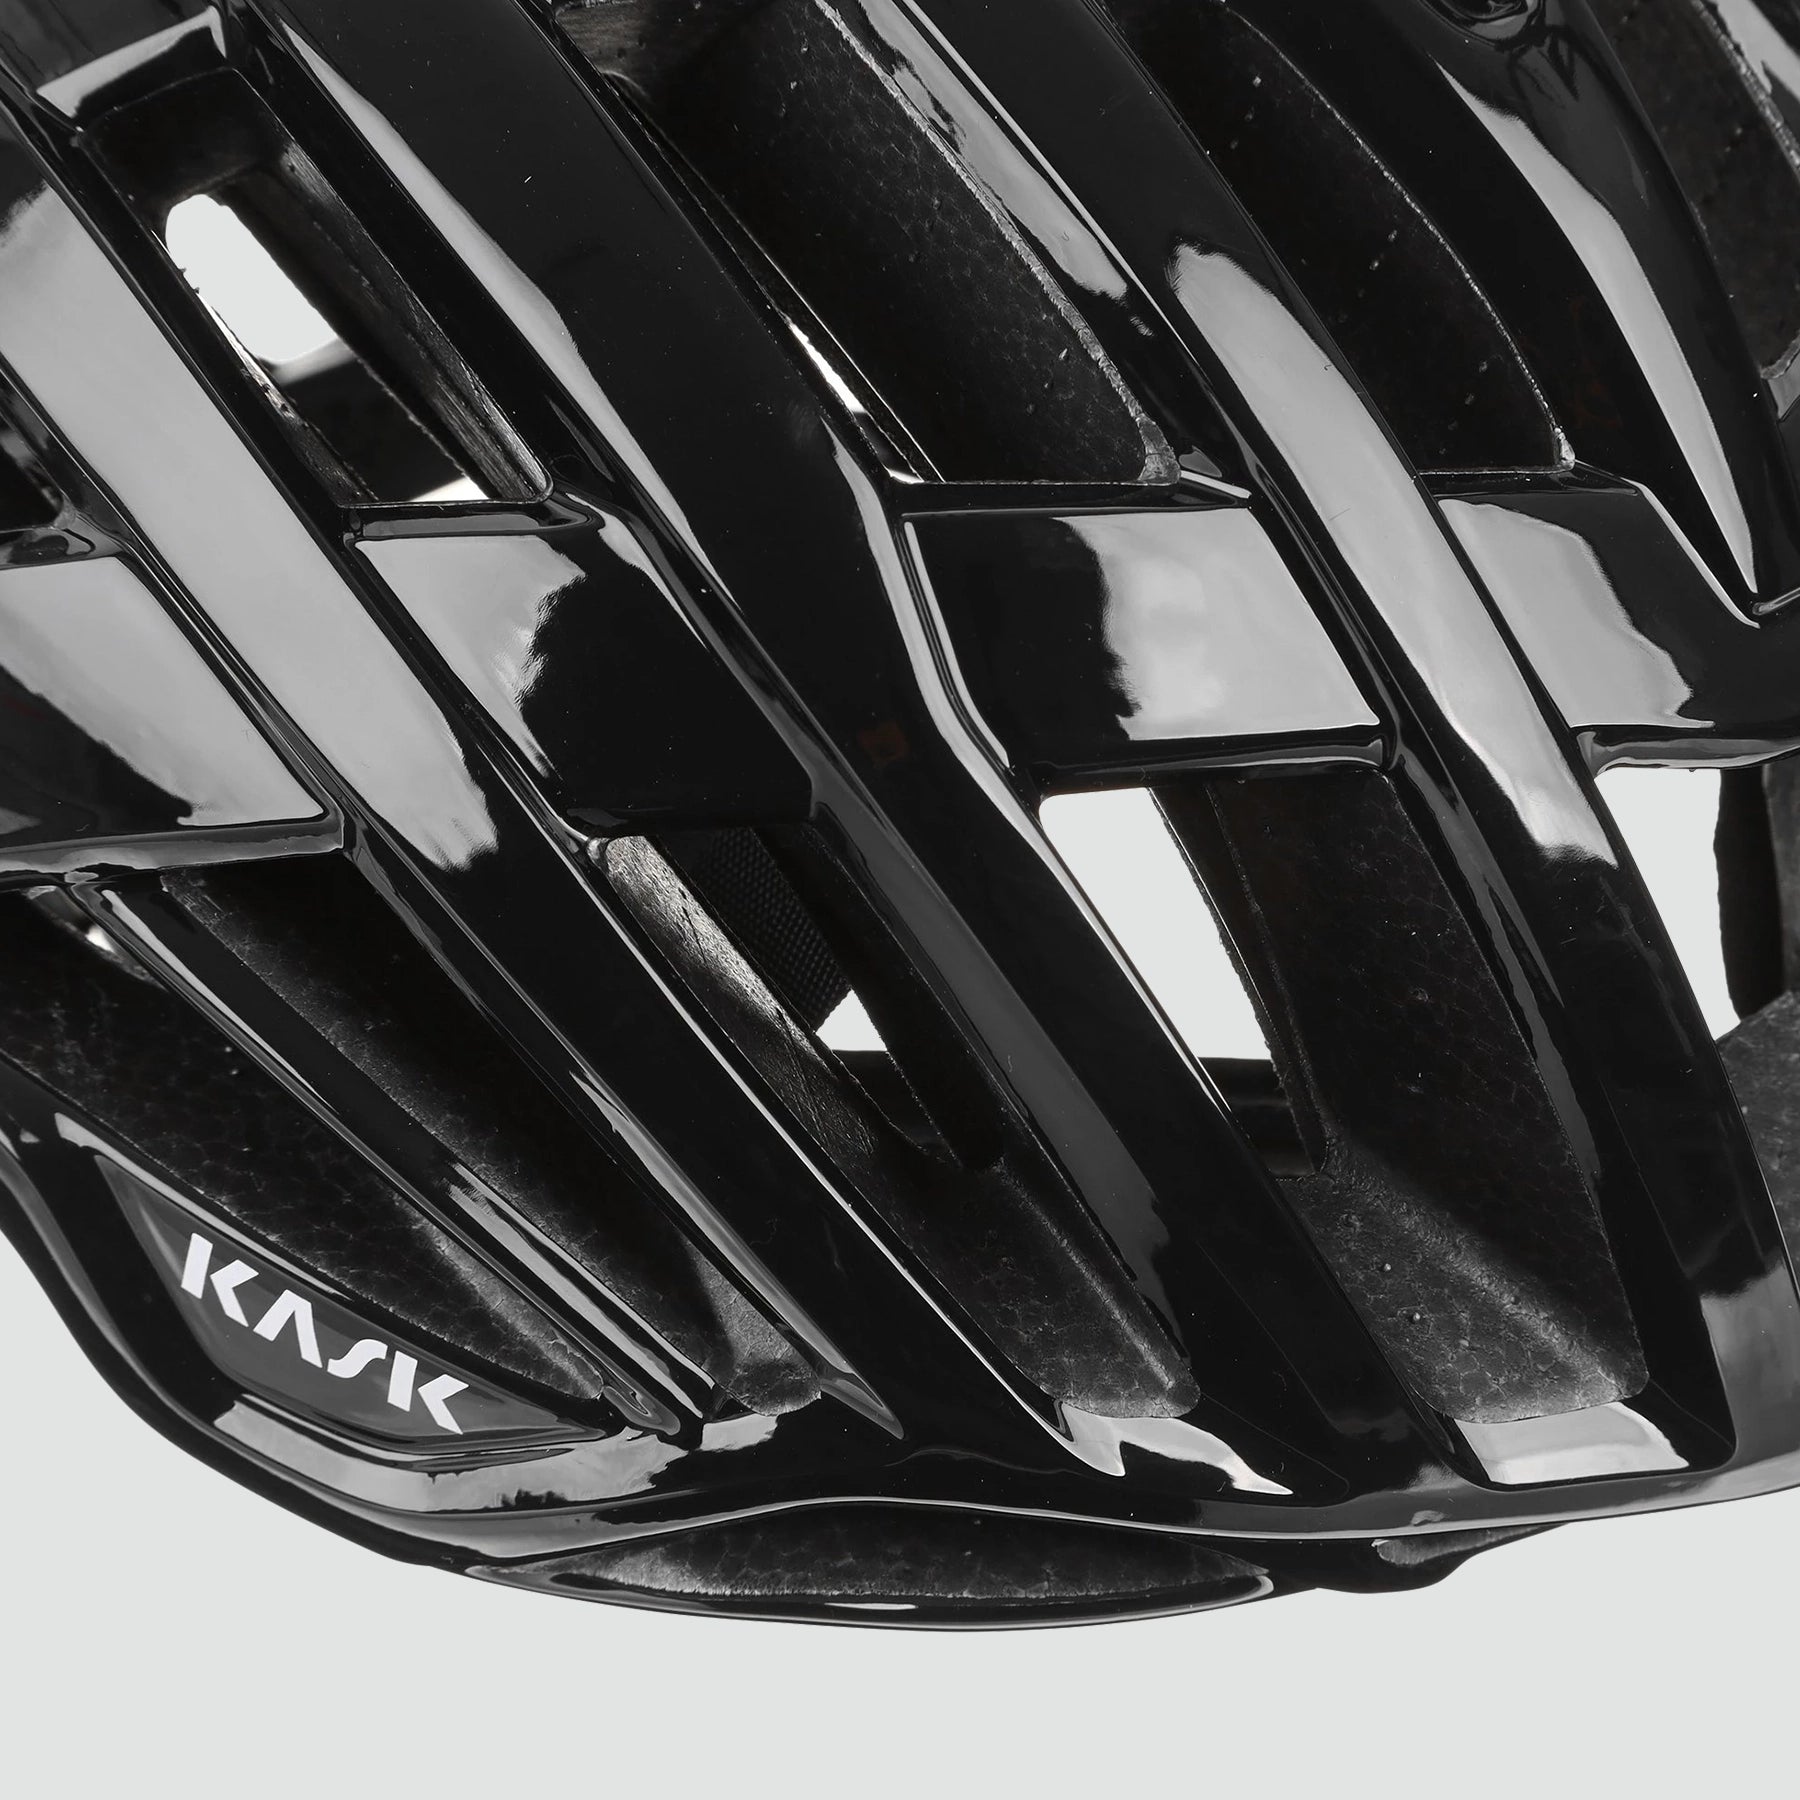 Valegro Helmet - Black